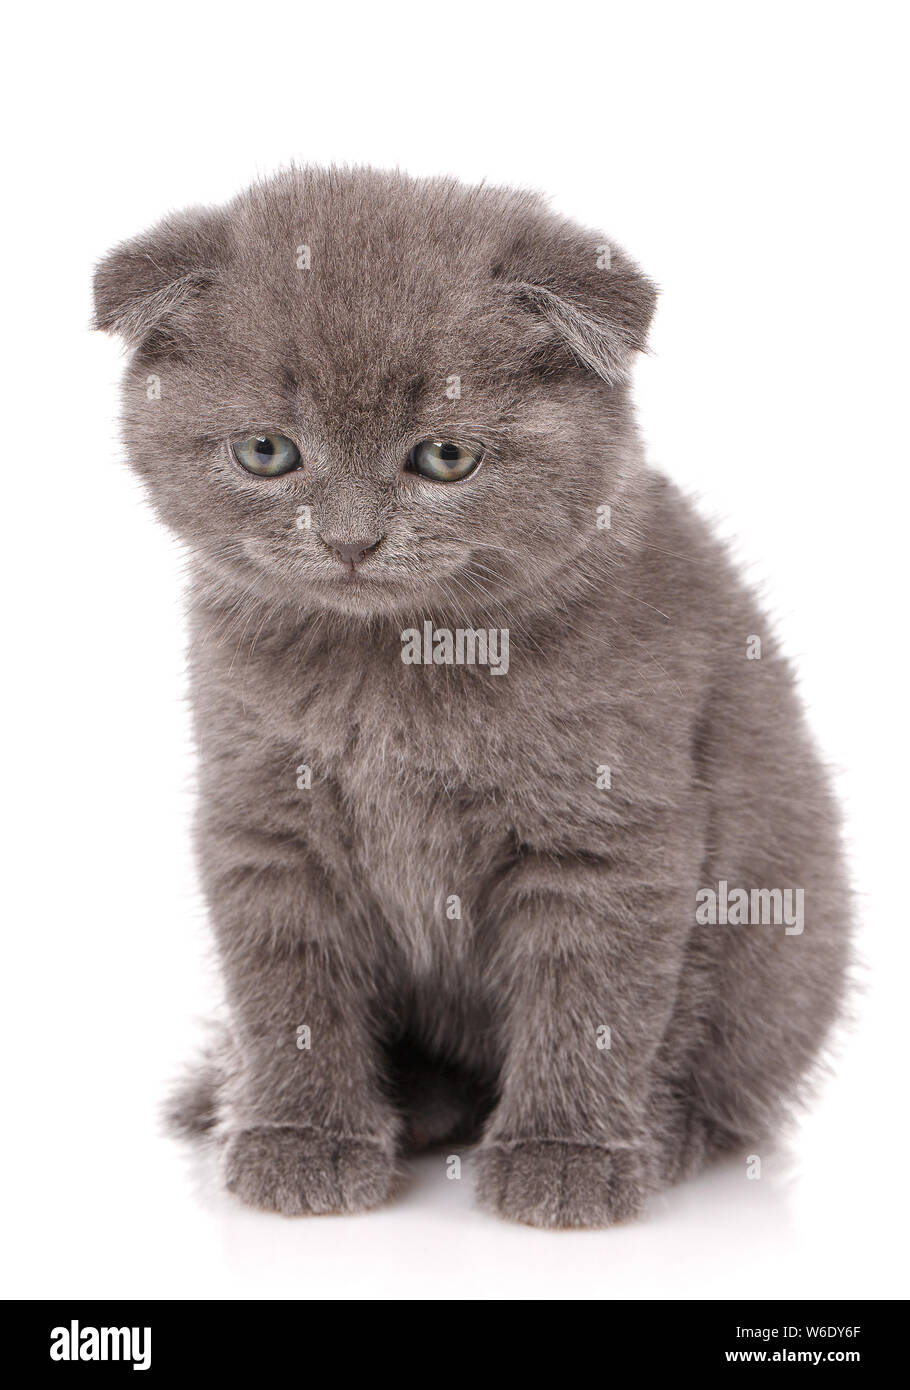 Lop-eared kitten. Scotland cat. Little playful kitten on white Stock Photo  - Alamy